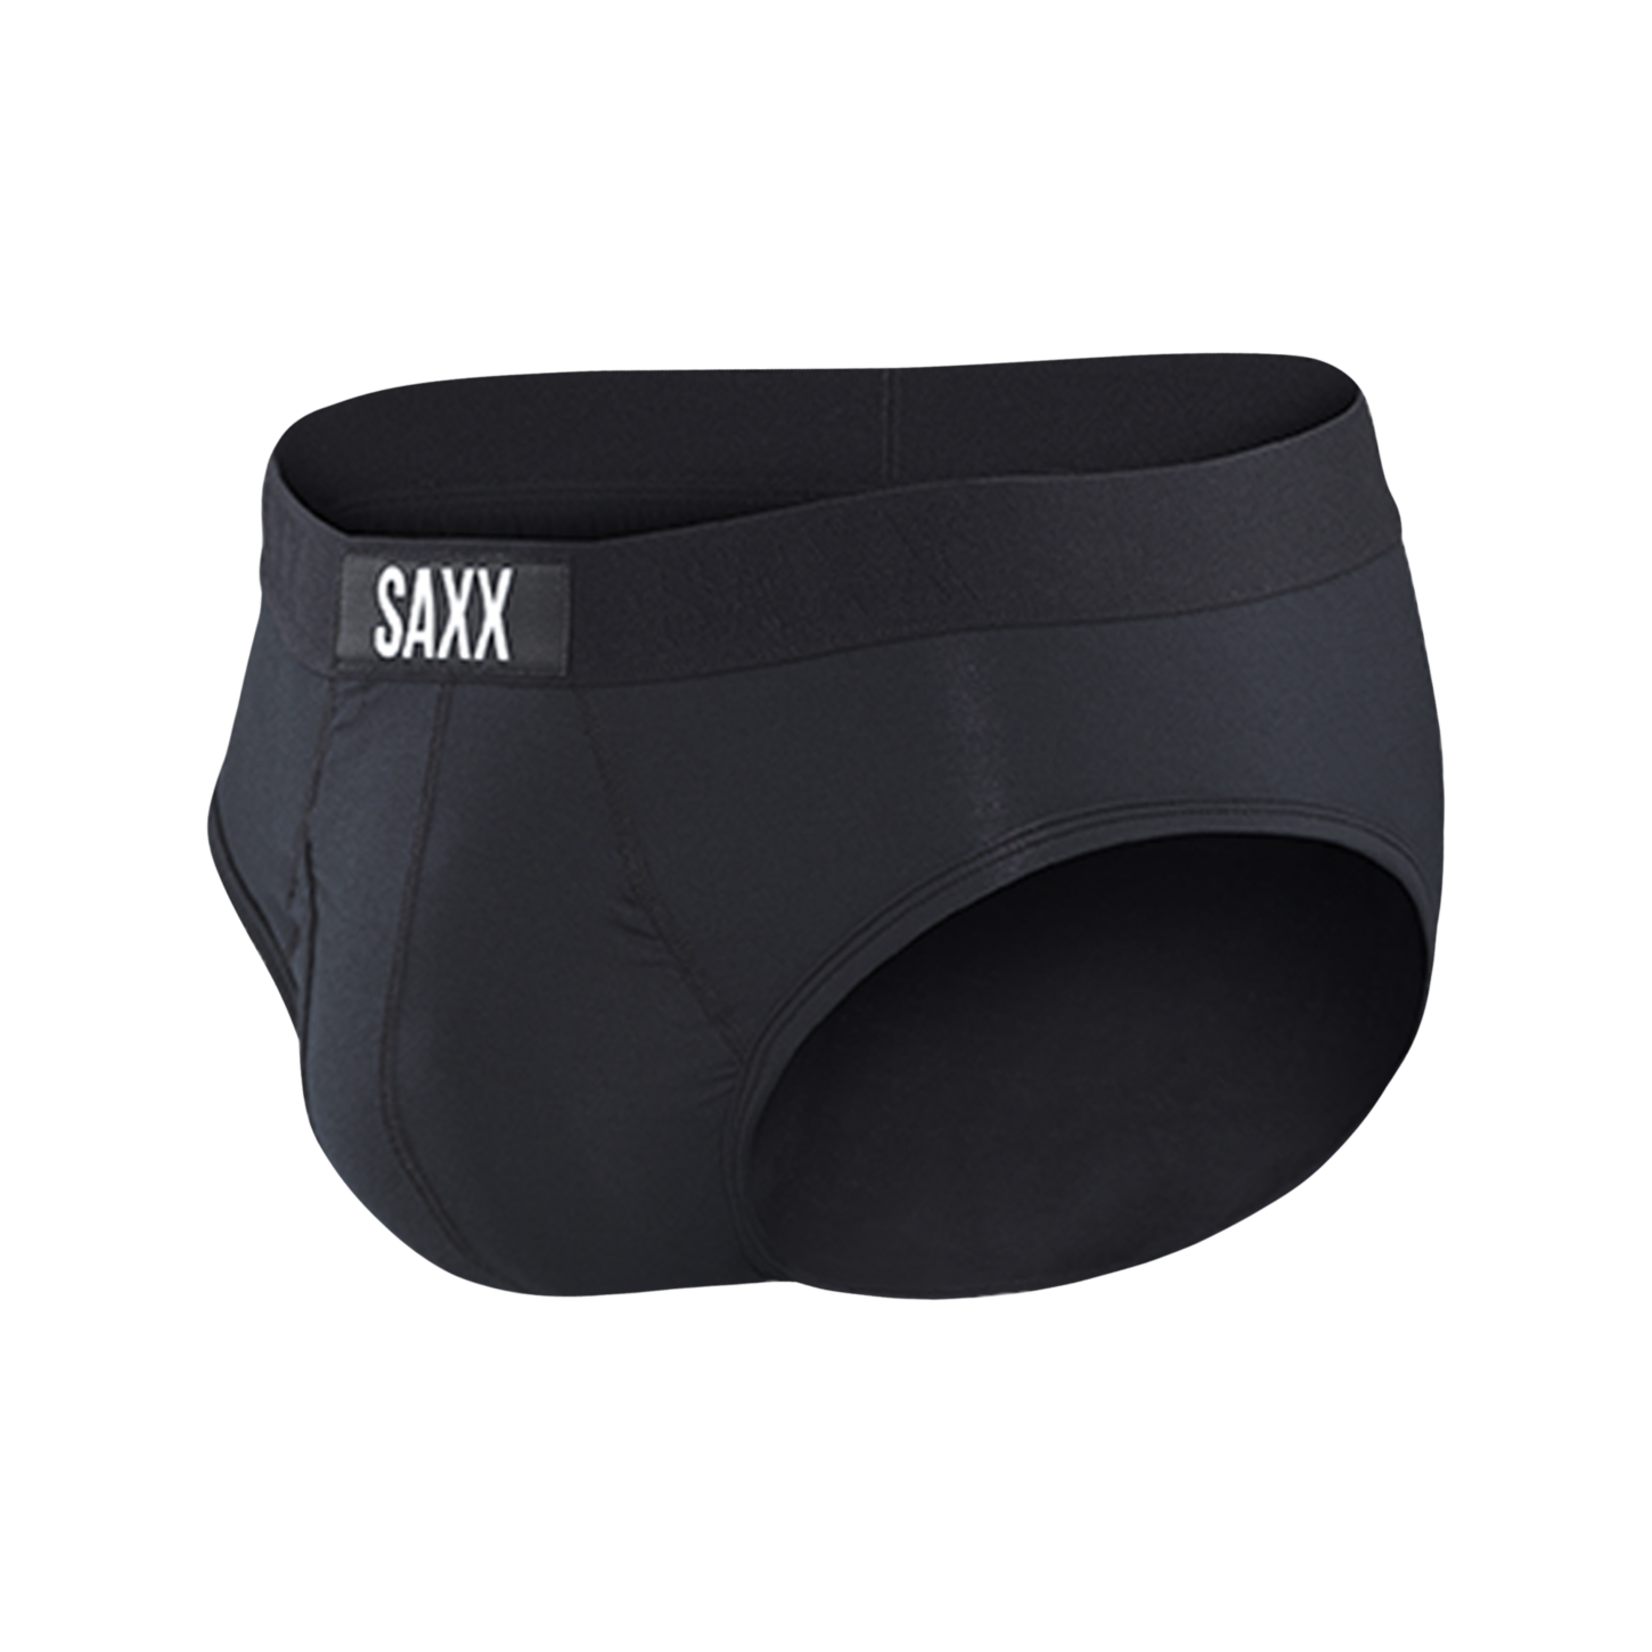 SAXX Saxx Ultra Brief